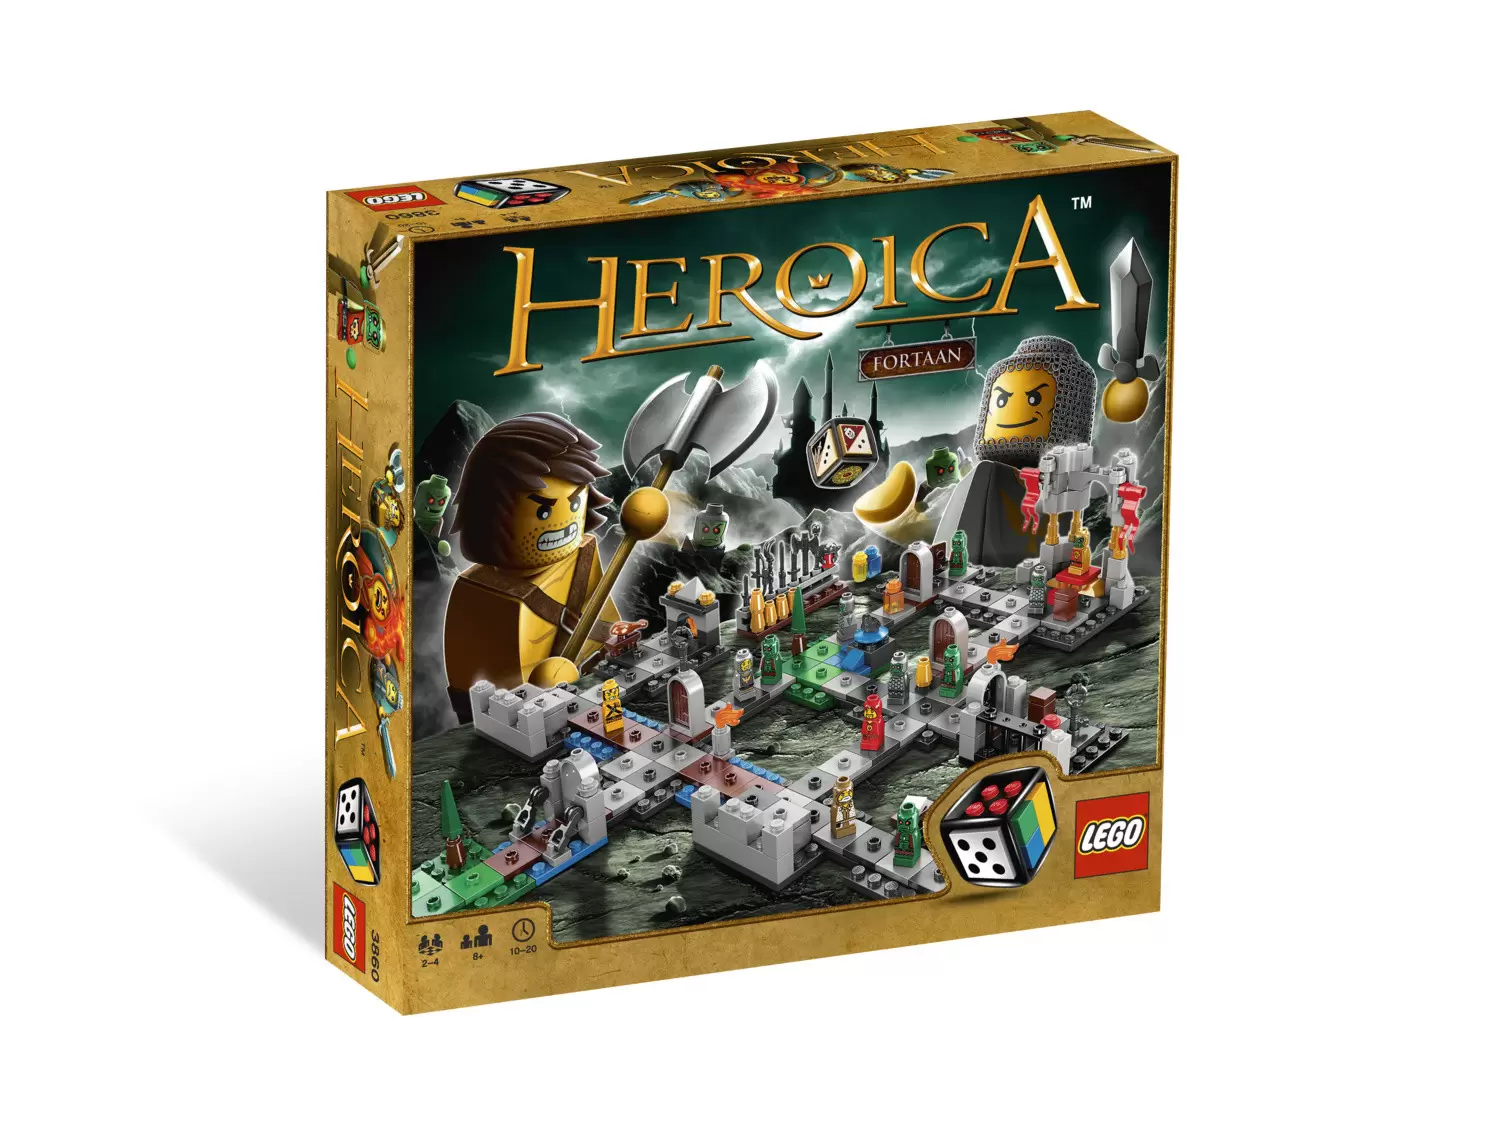 LEGO Boardgames - Heroica - Castle Fortaan